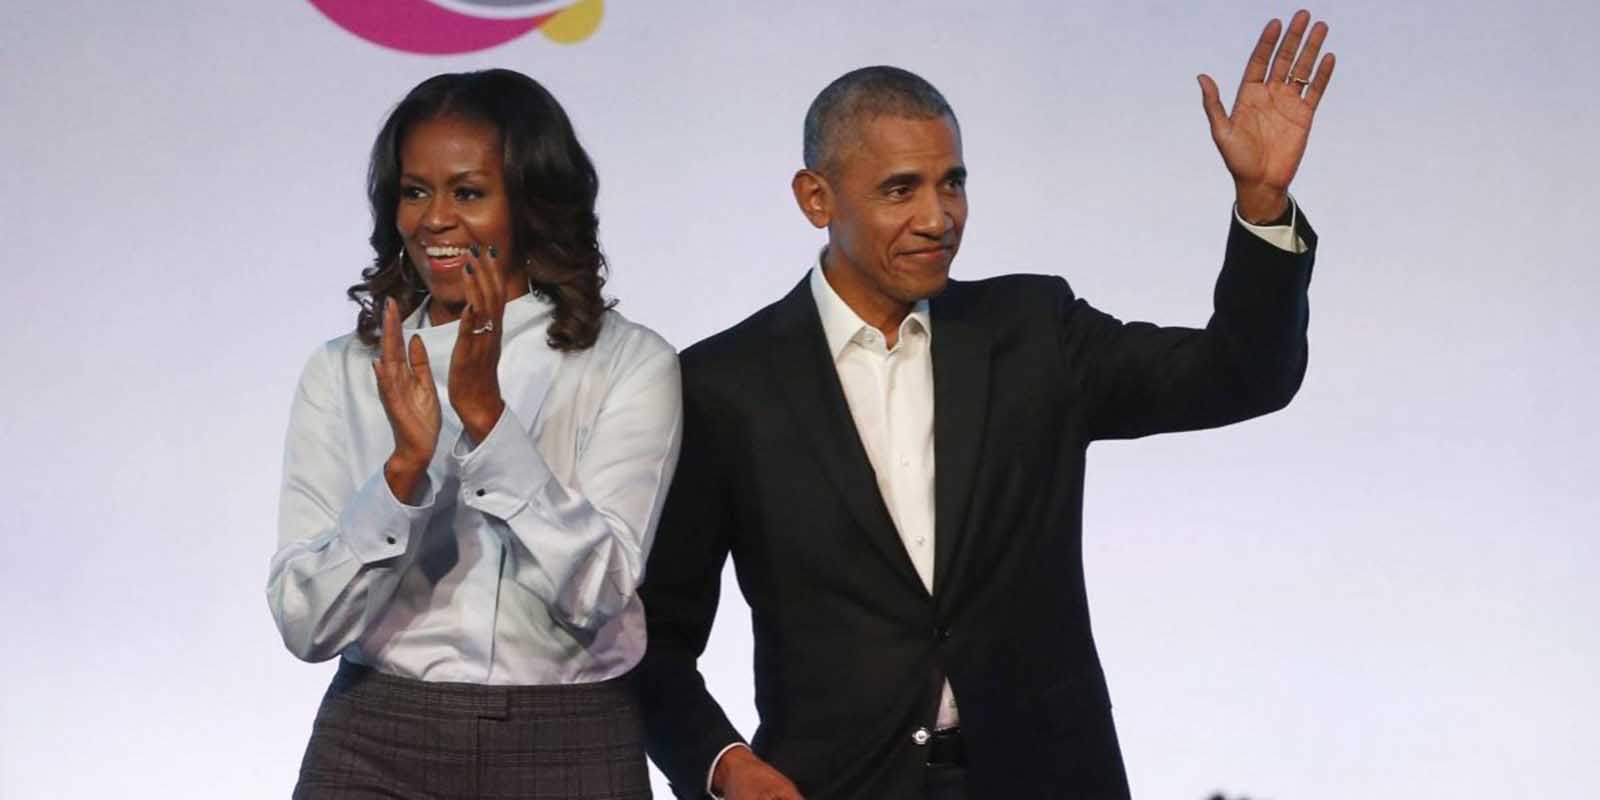 Barack y Michelle Obama negocian producir programas para Netflix, según NYT